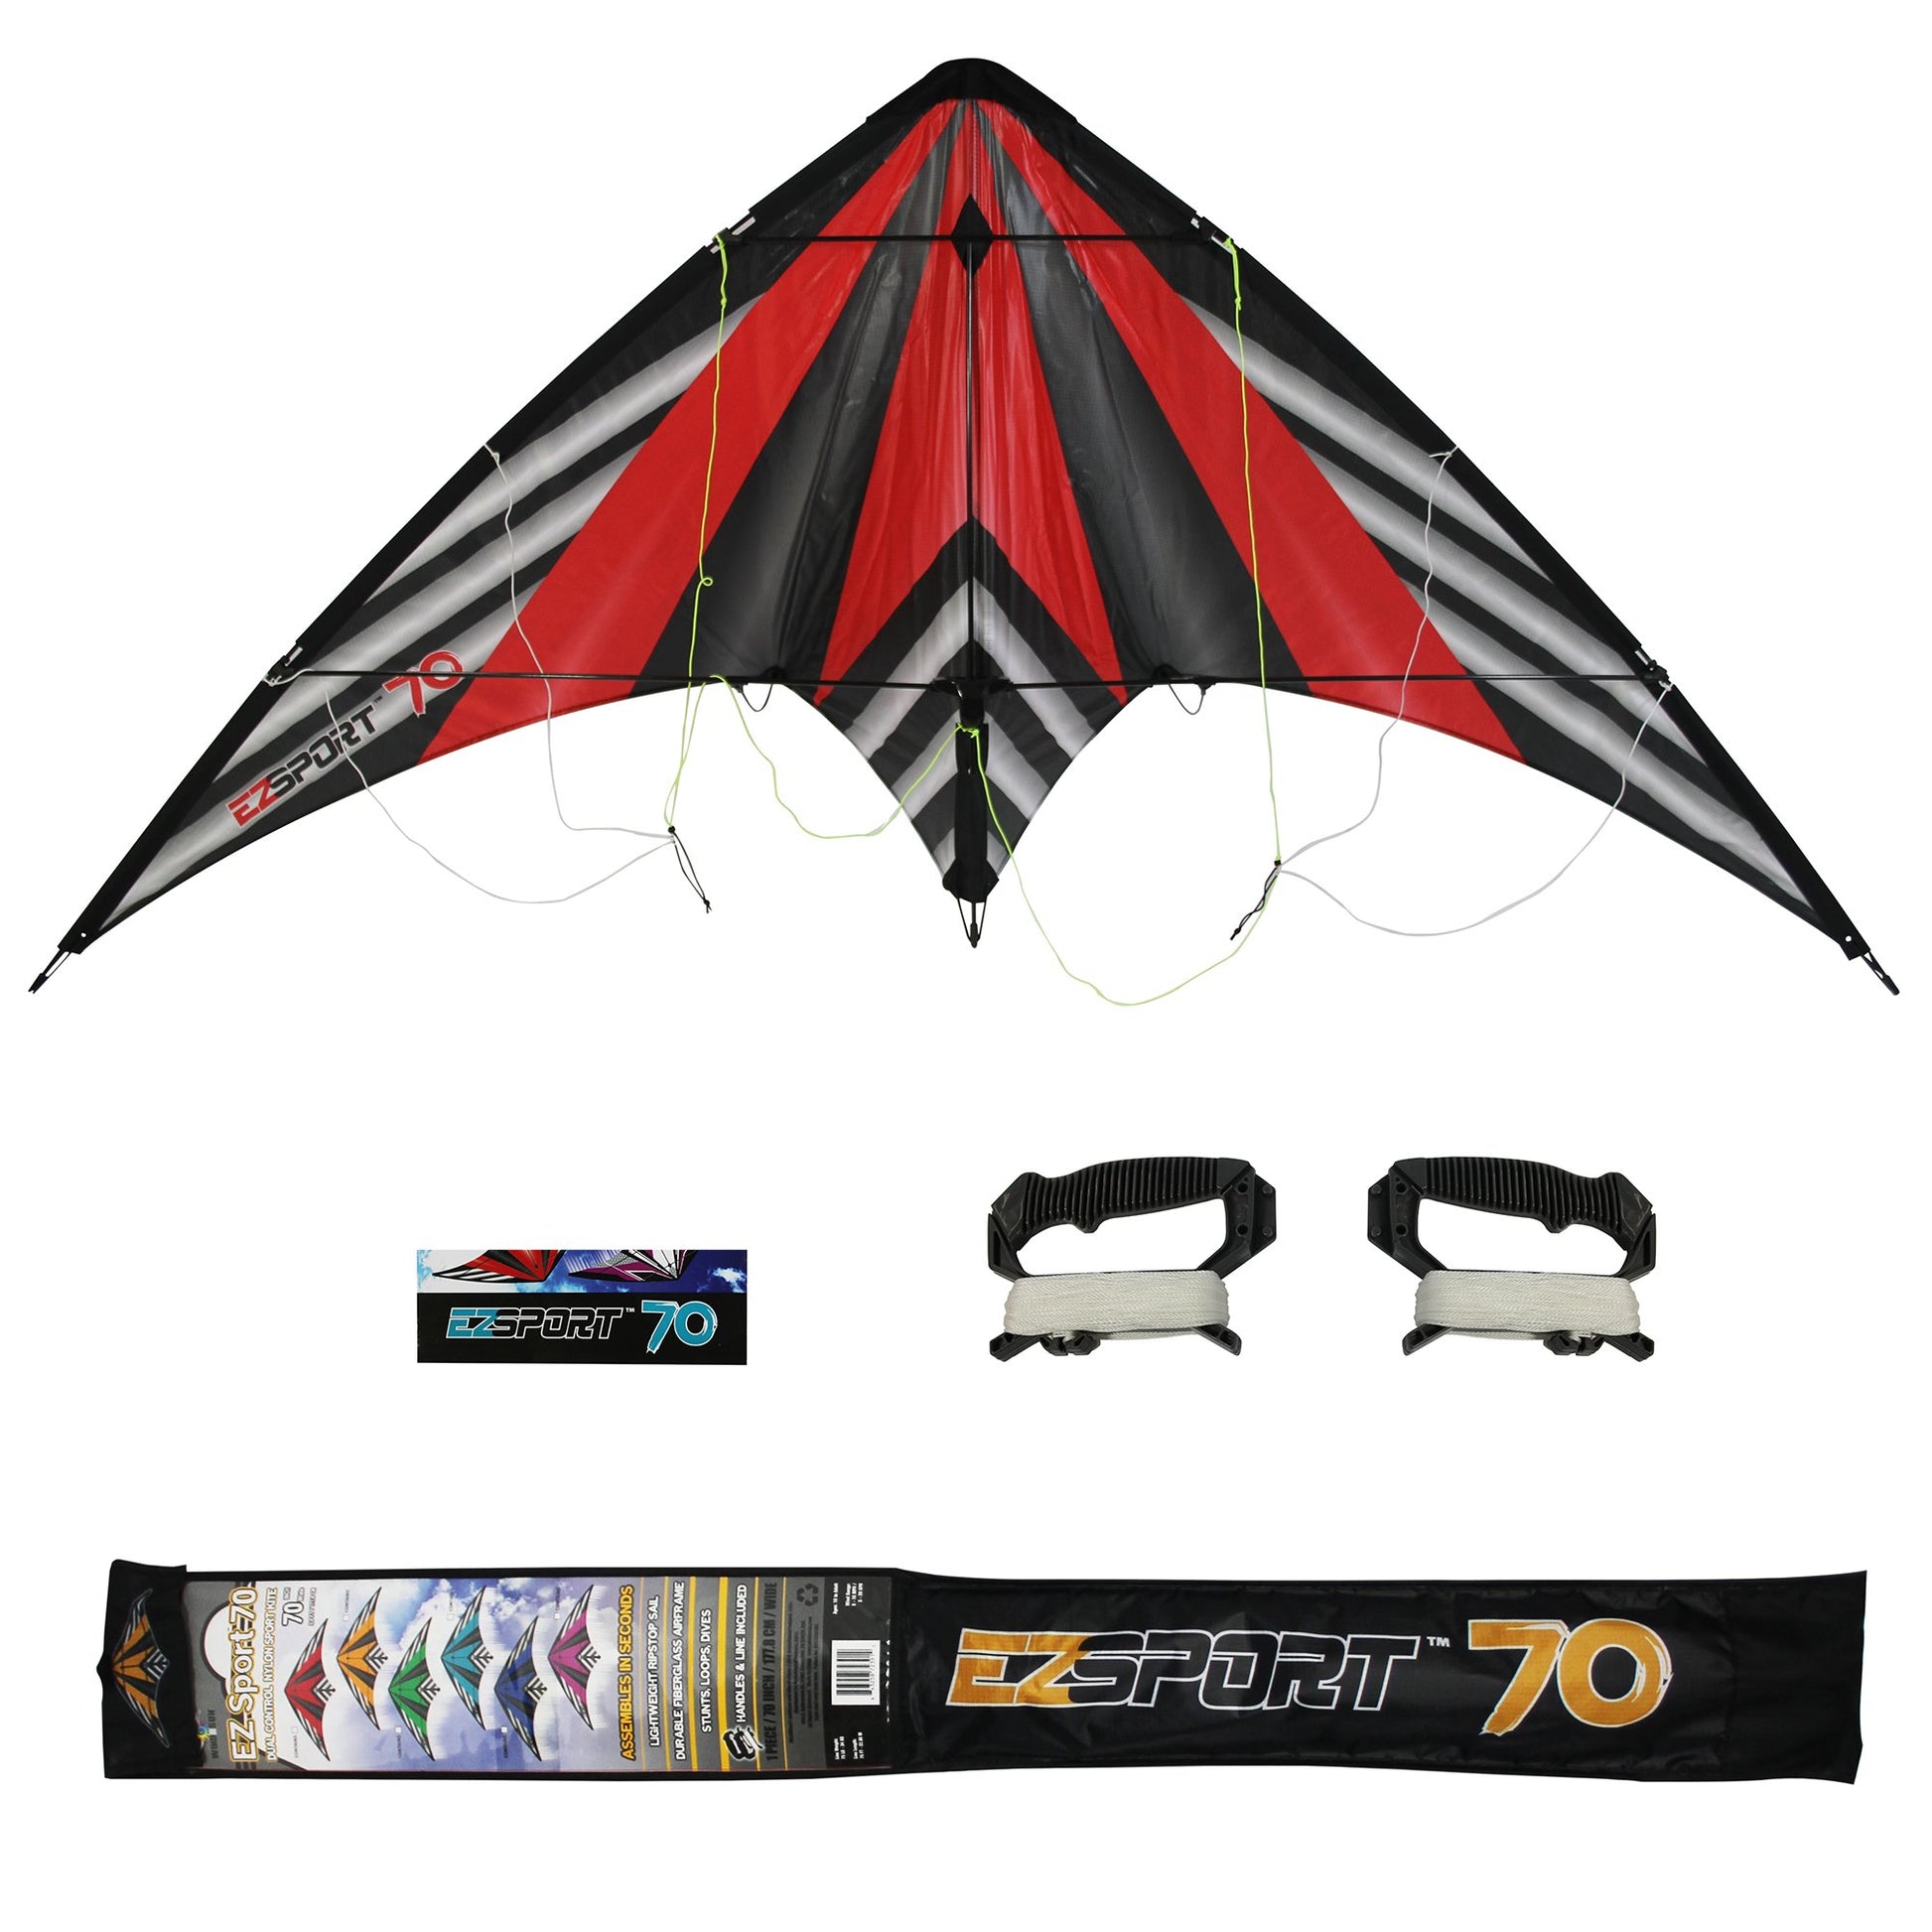 WindNSun EZ Sport 70 Dual Control Sport Kite Red Stripe Nylon Kite photo showing handle